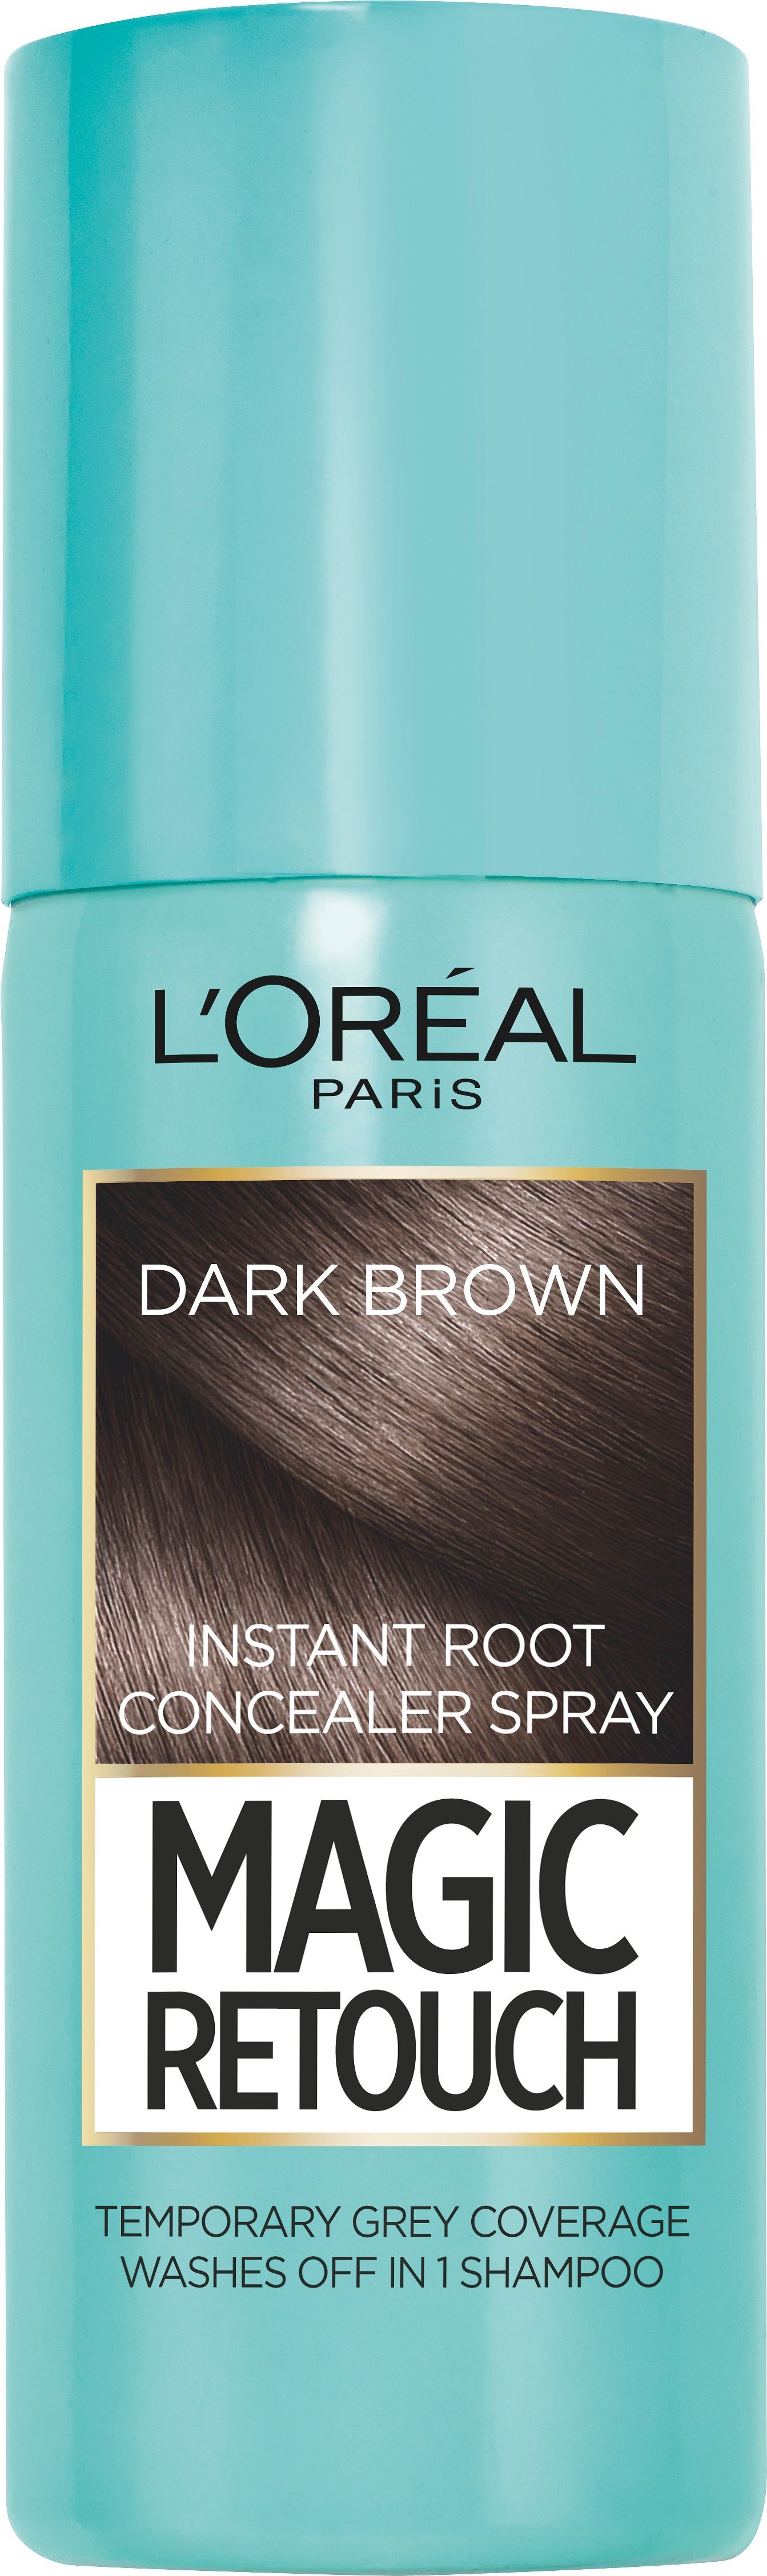 L'Oréal Magic Retouch Concealer Spray Dark Brown 75 ml